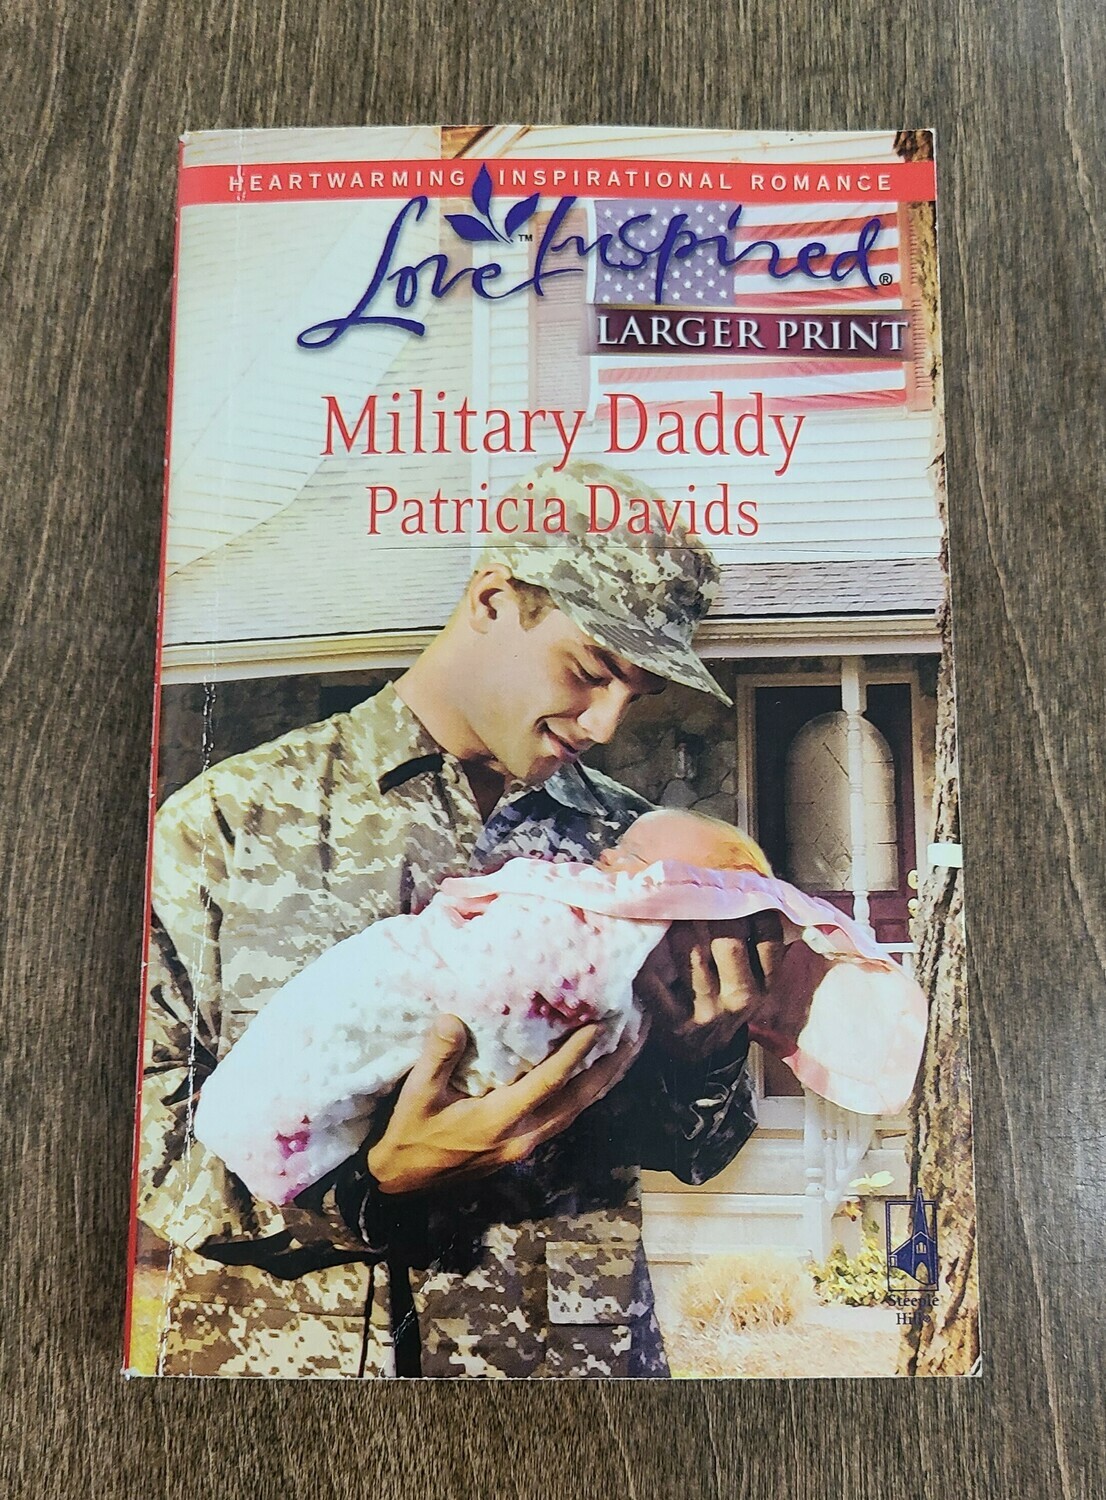 Military Daddy by Patricia Davids